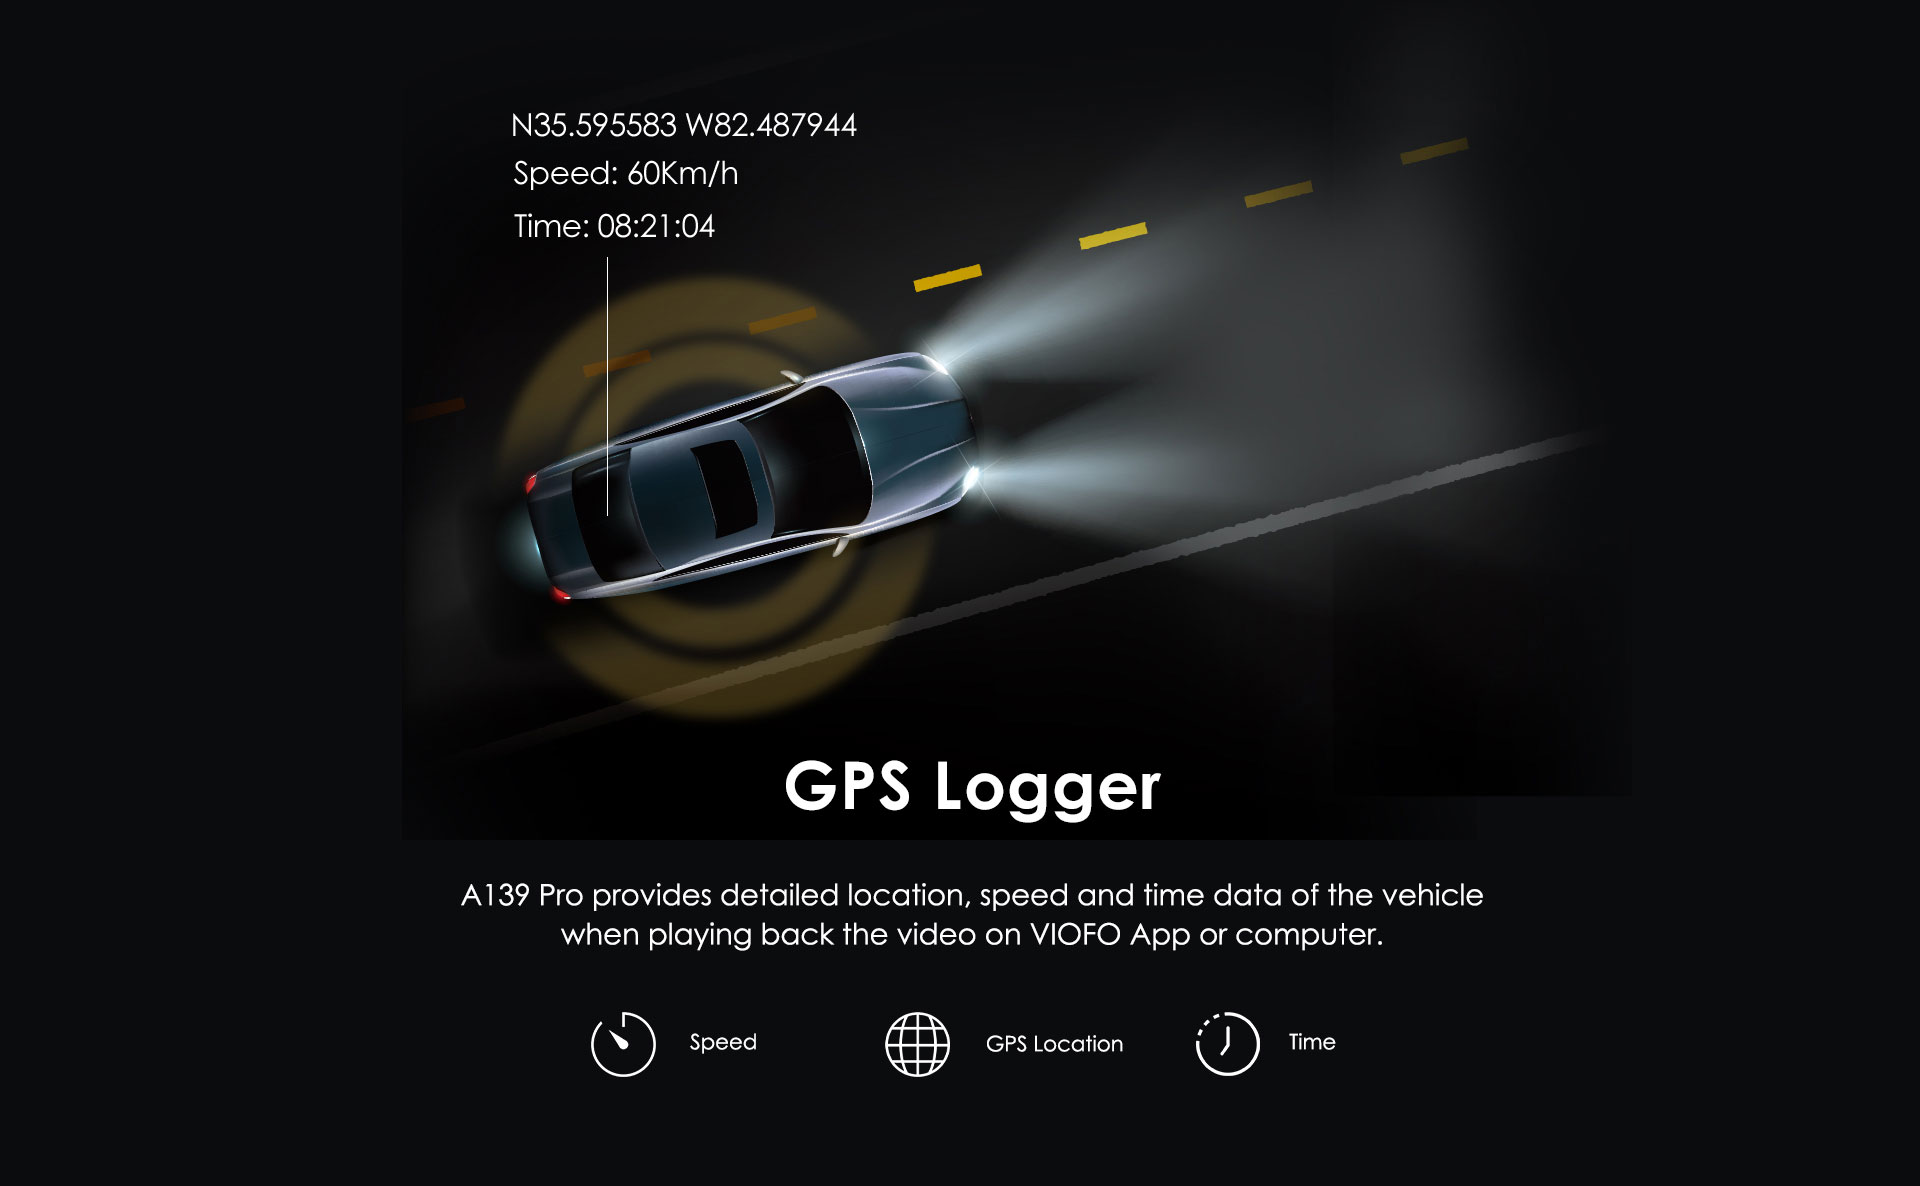 GPS Logger on the Viofo A139 PRO